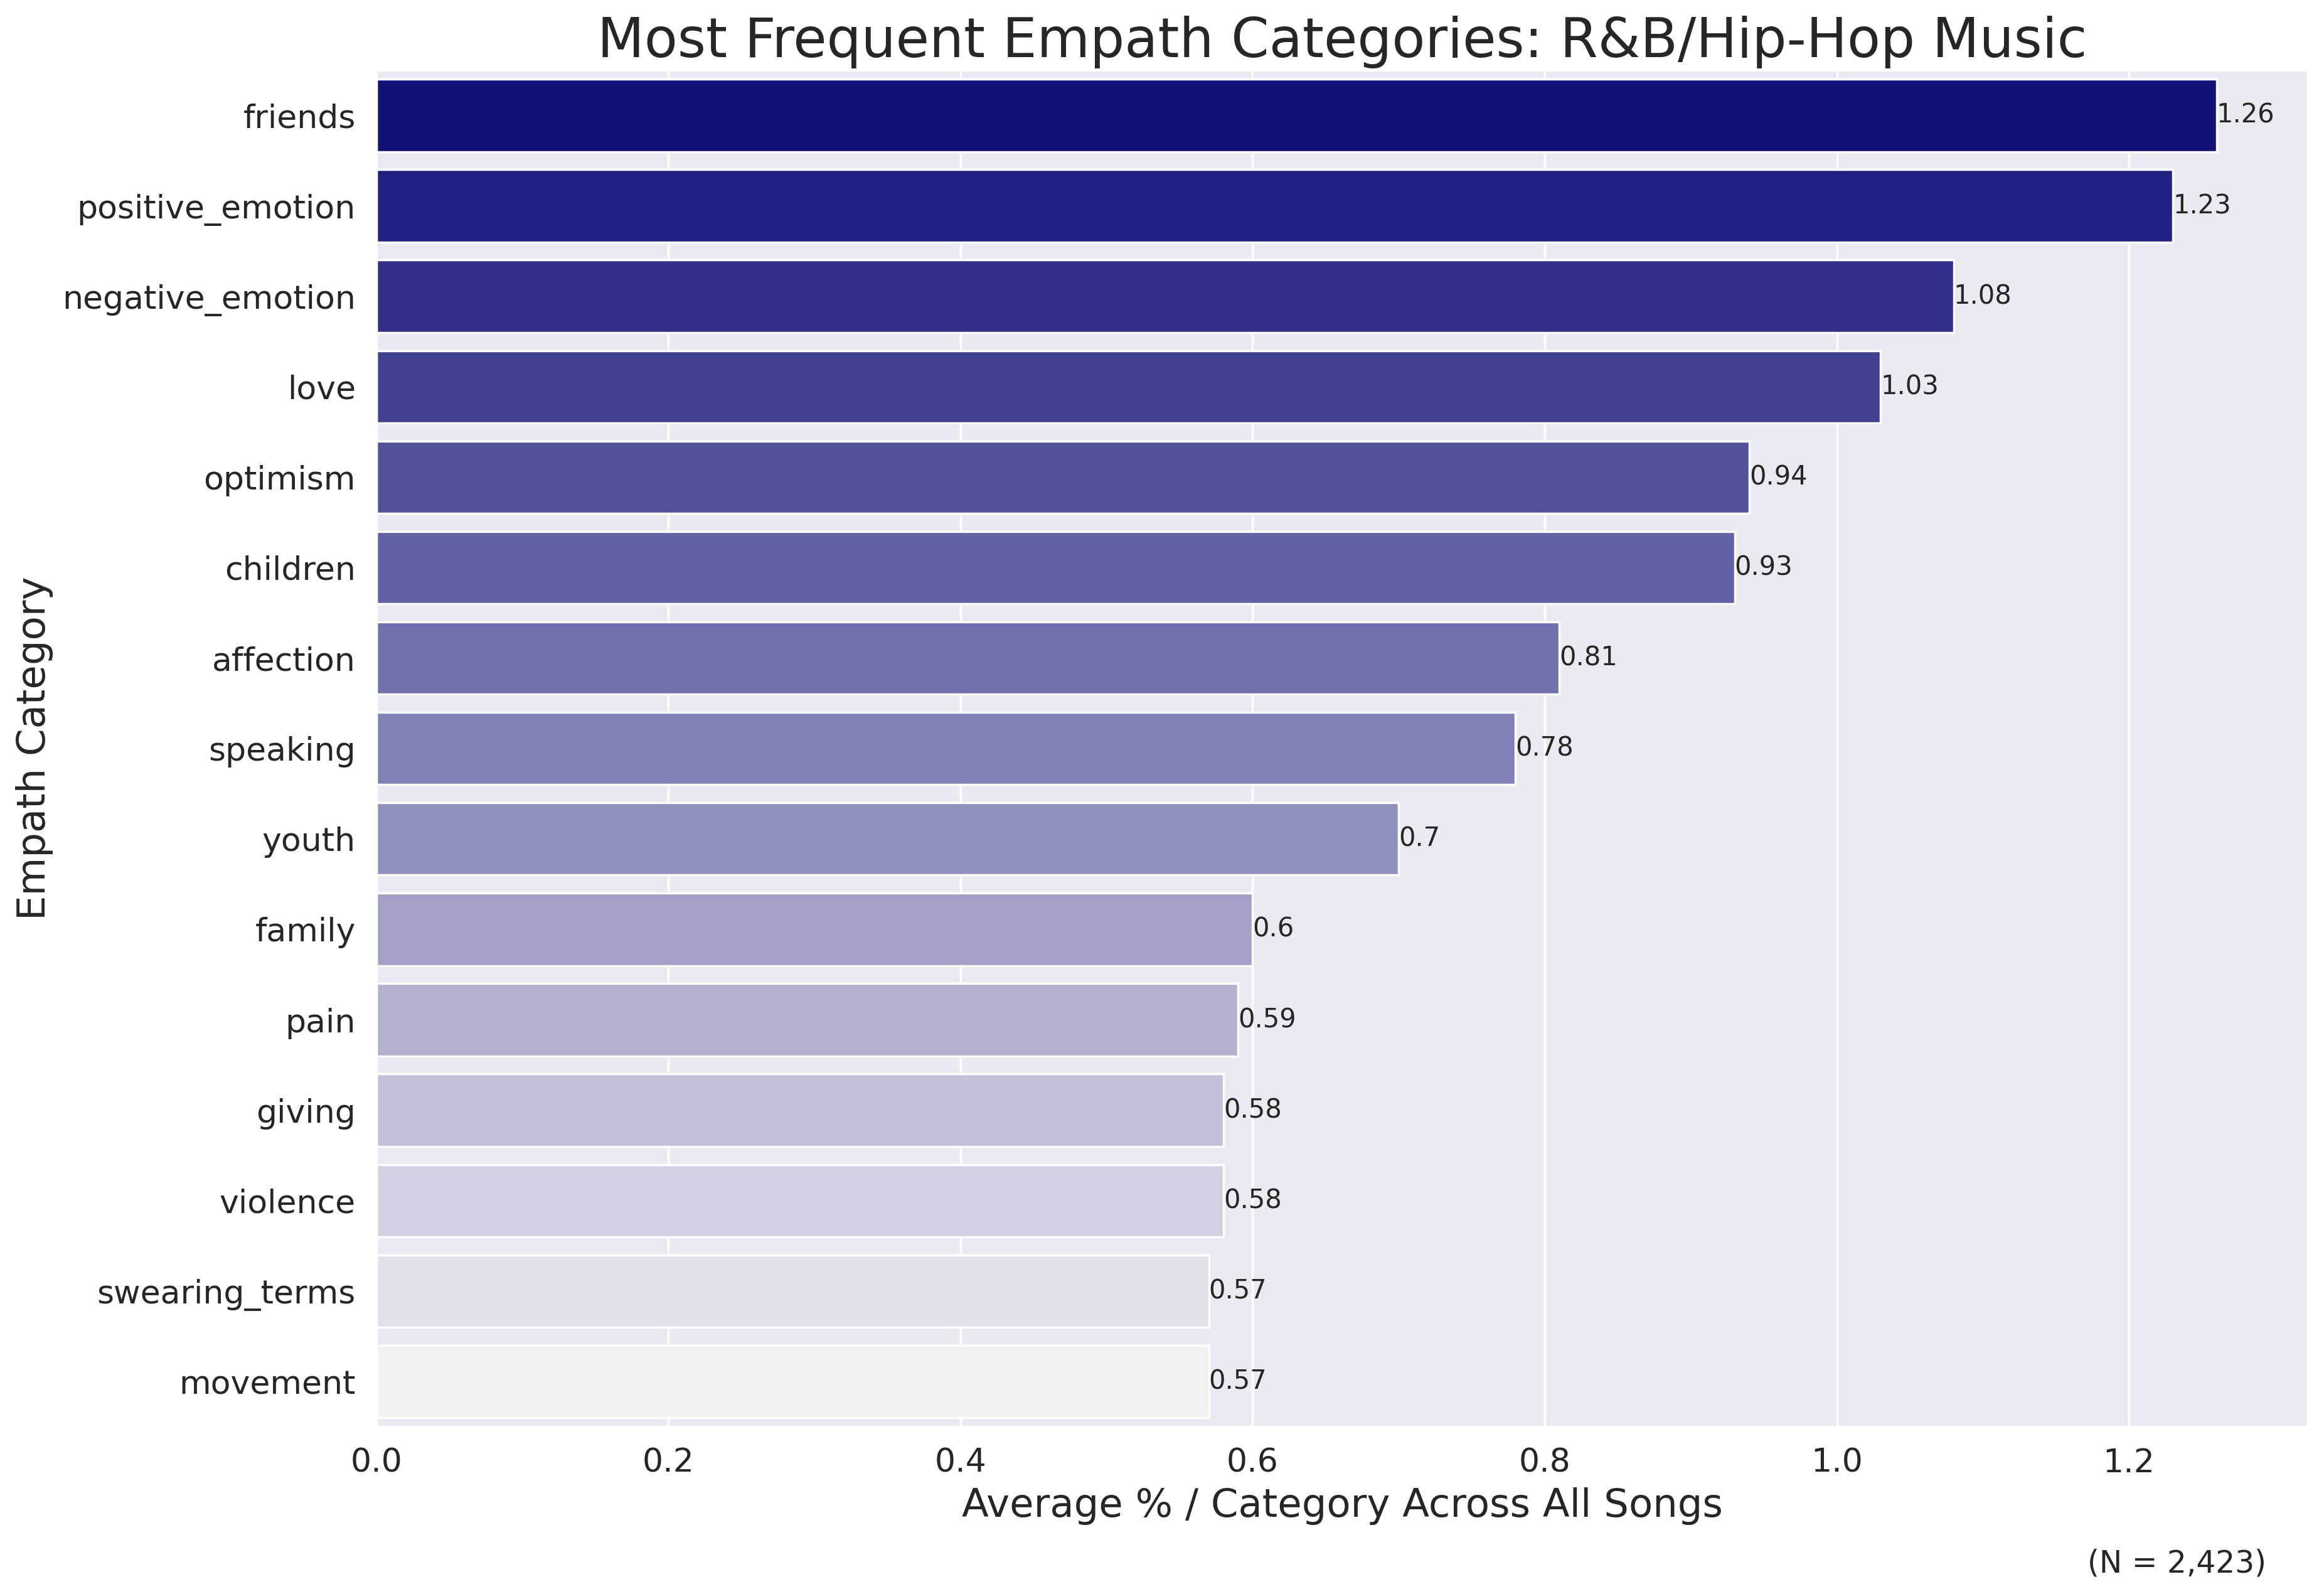 R&B/Hip-Hop Top Empath Categories